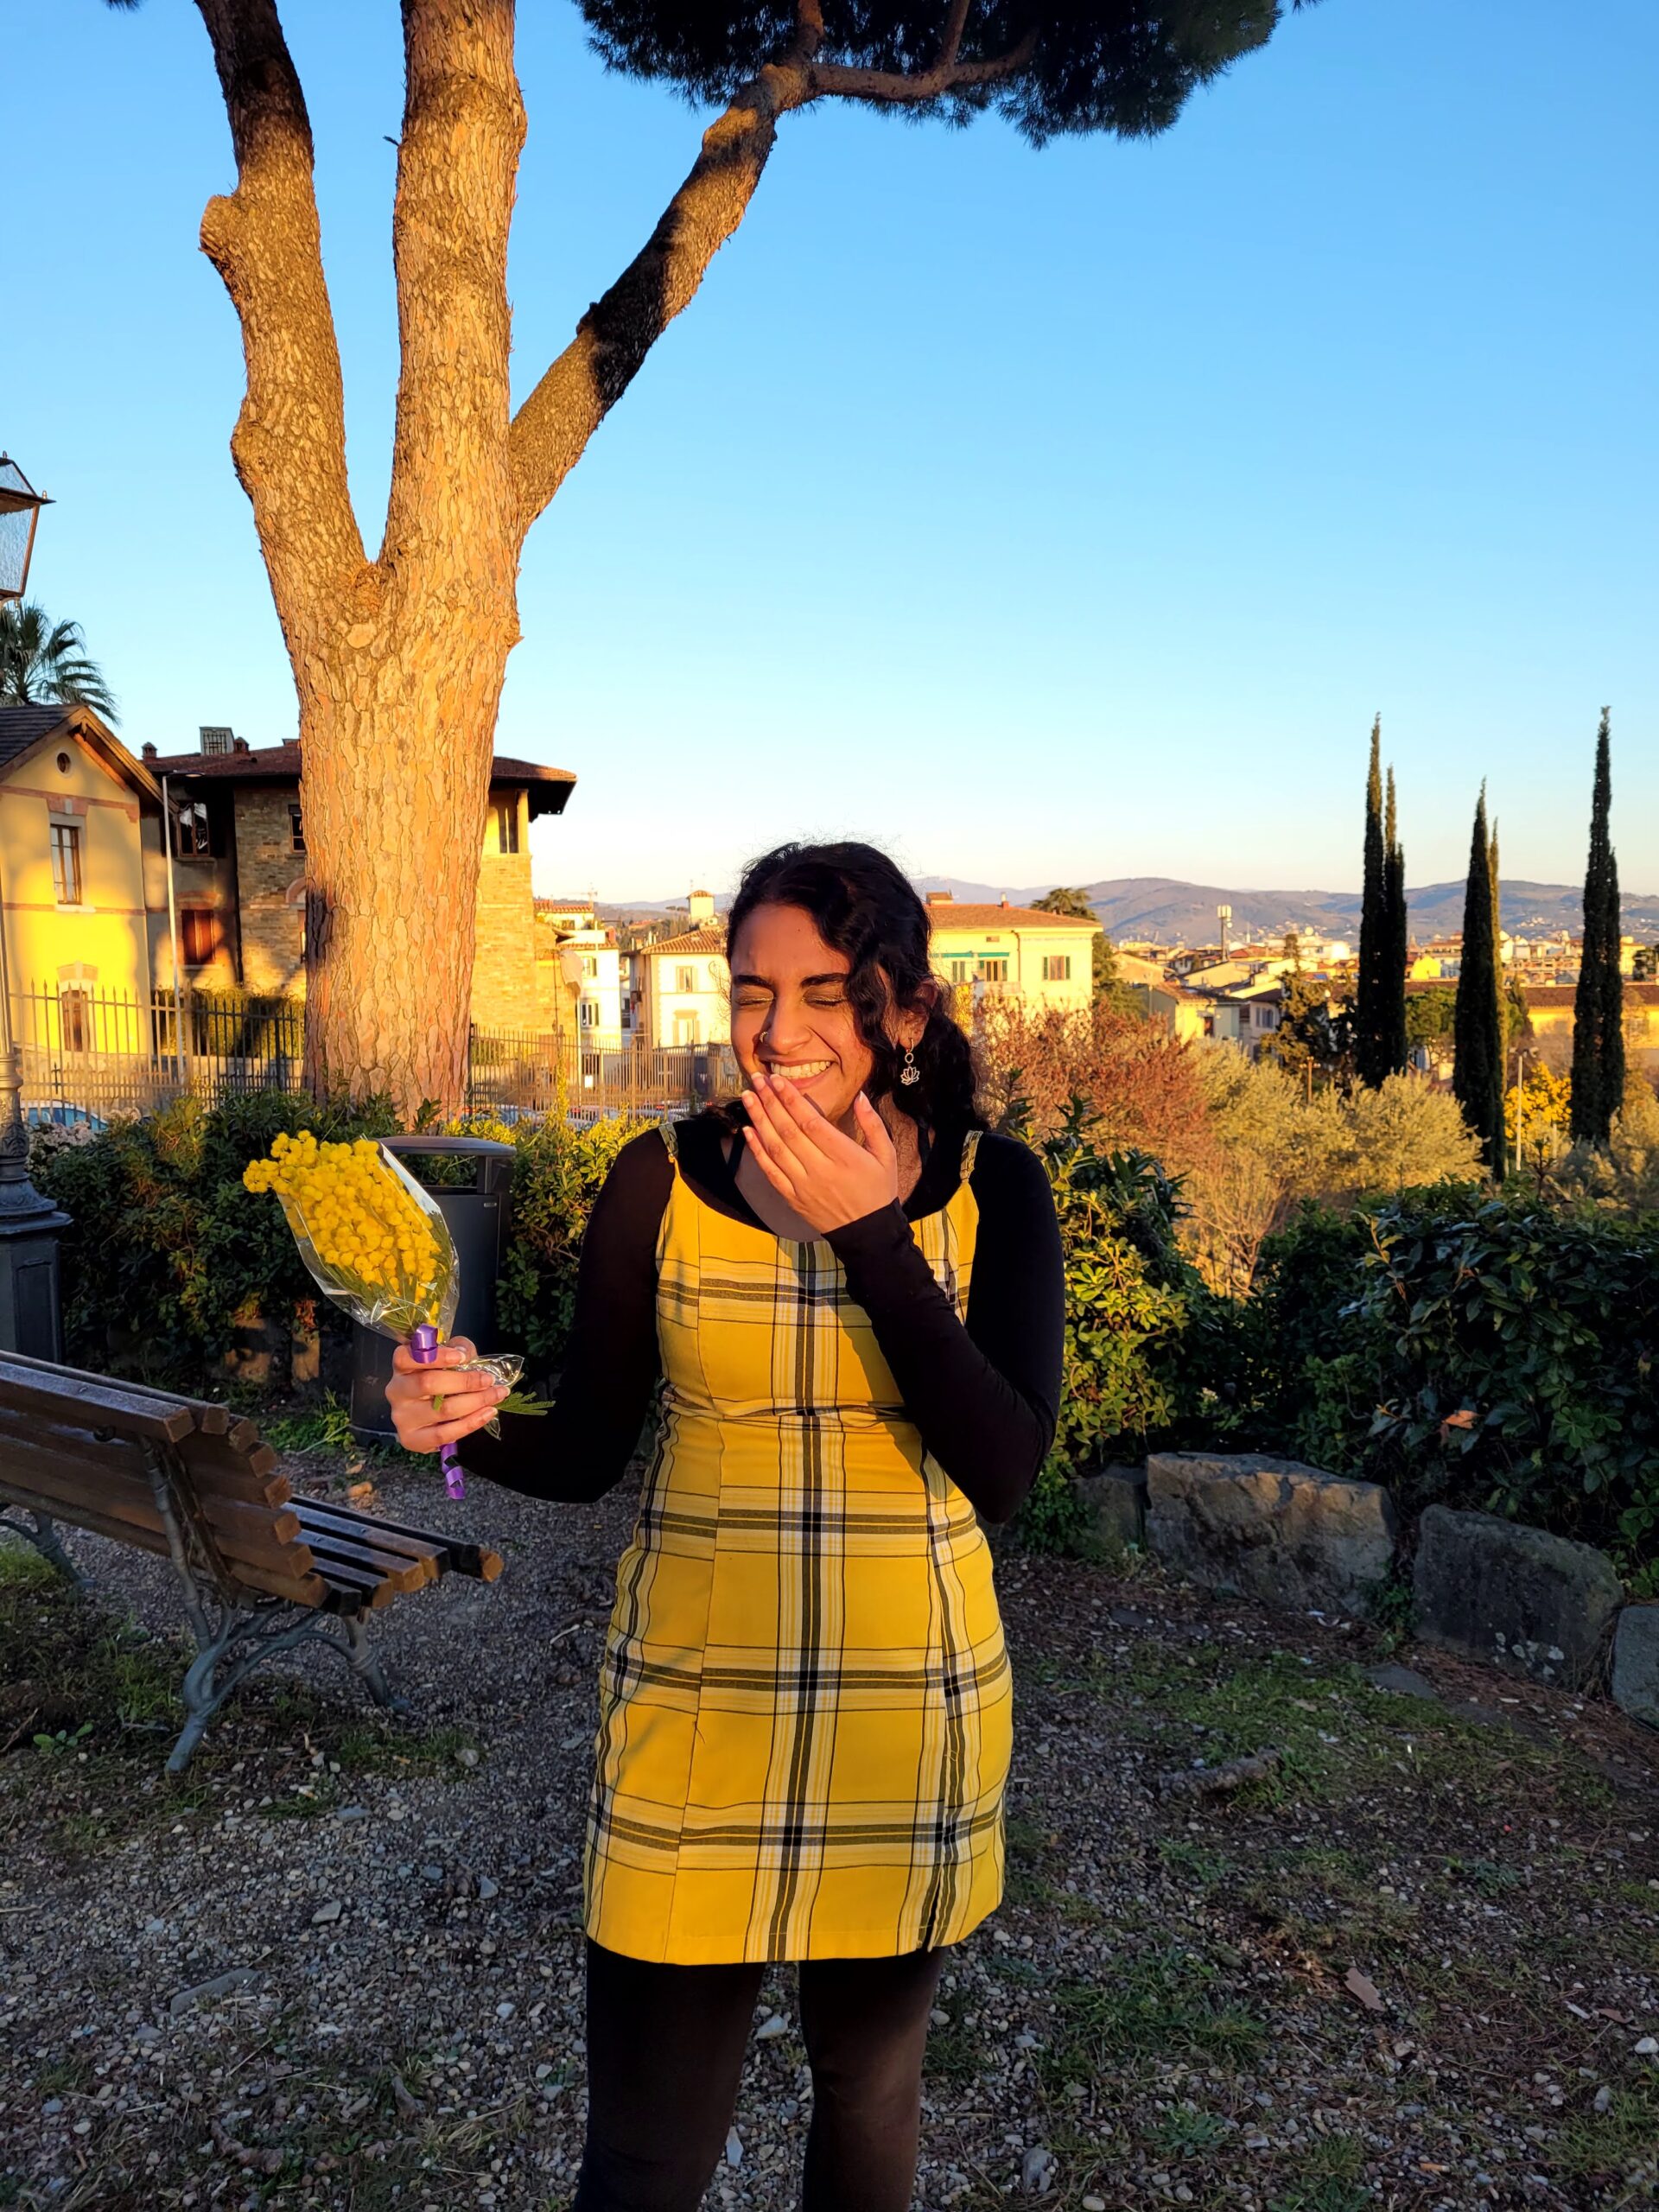 Eshika smiling at a yellow flower